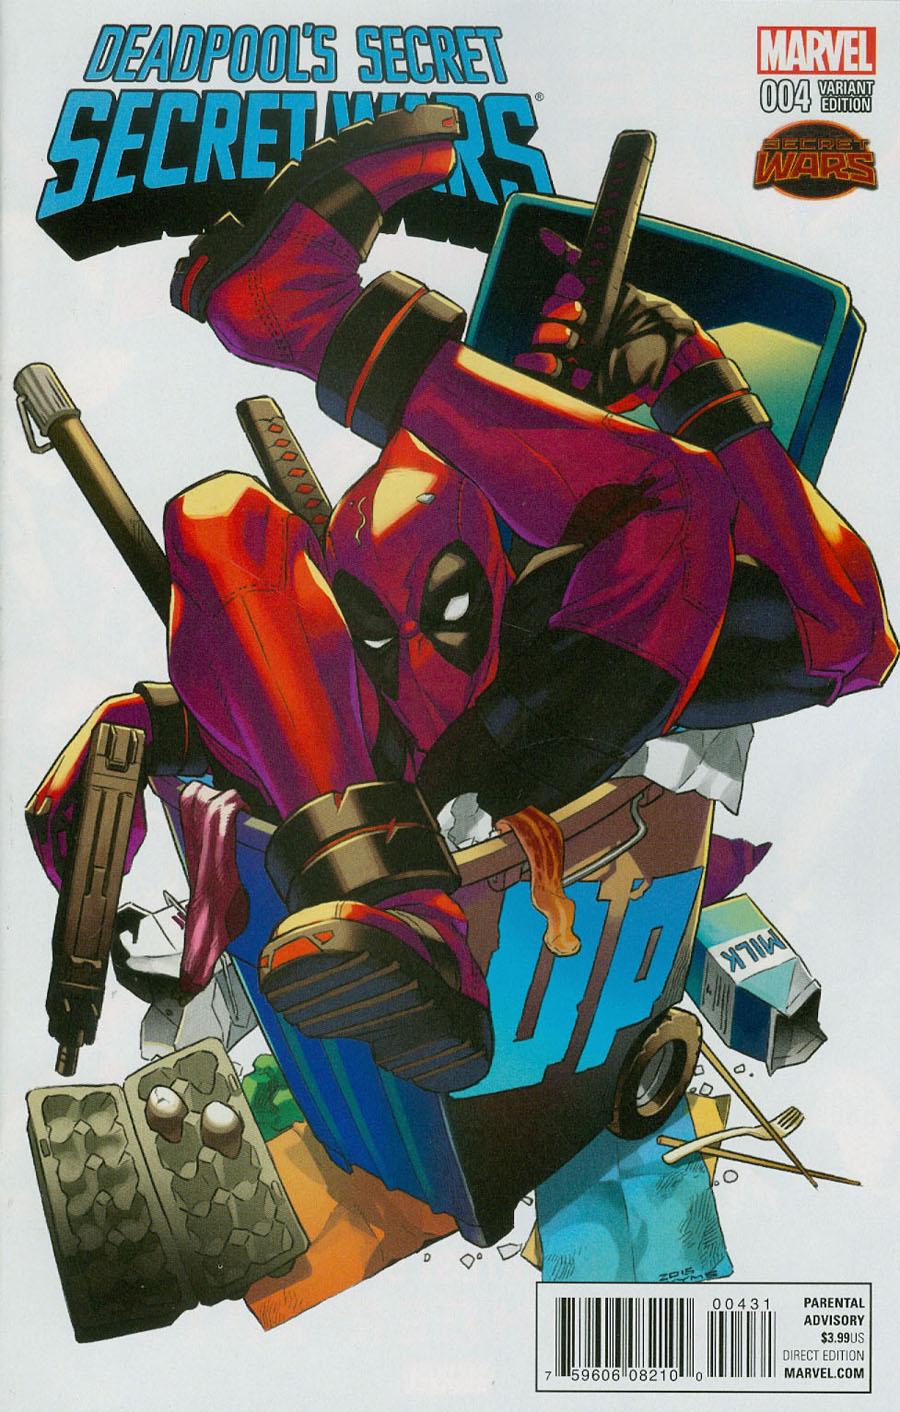 Deadpools Secret Secret Wars #4 Cover B Variant Manga Cover (Secret Wars Warzones Tie-In)